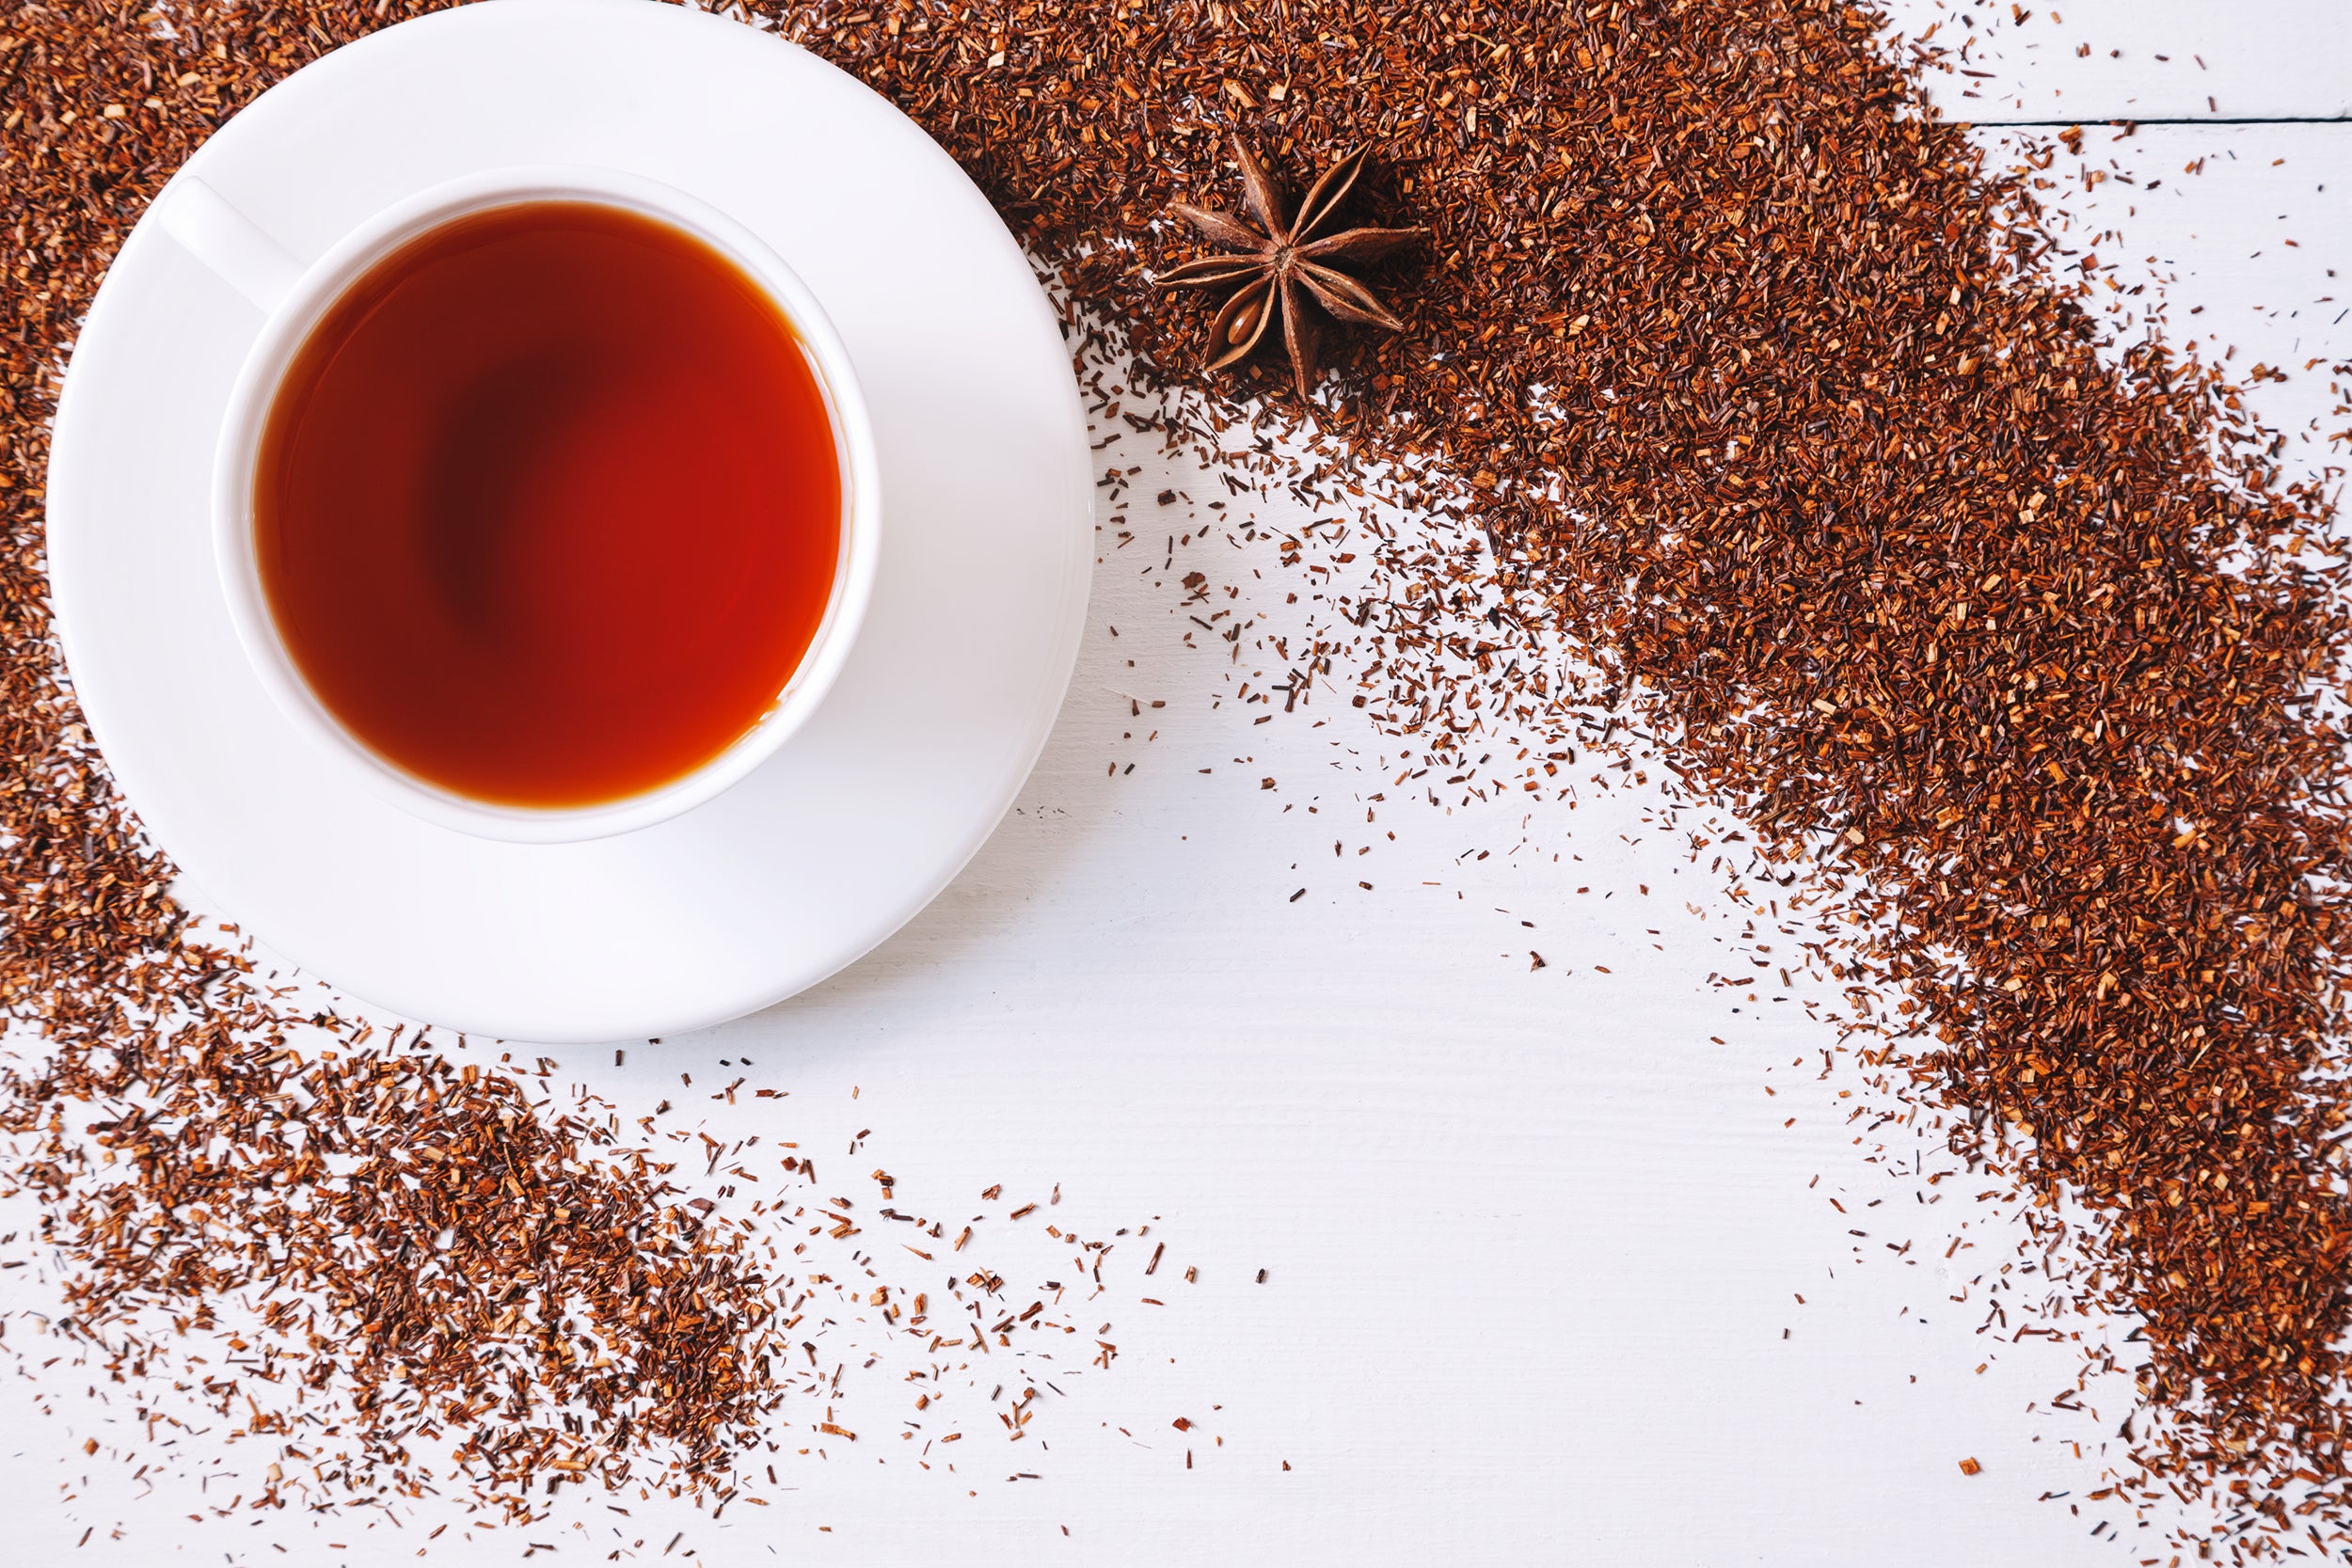 Uptown Tea Shop - Premium Loose Leaf Teas and Accessories | Blog | Rooibos Teas